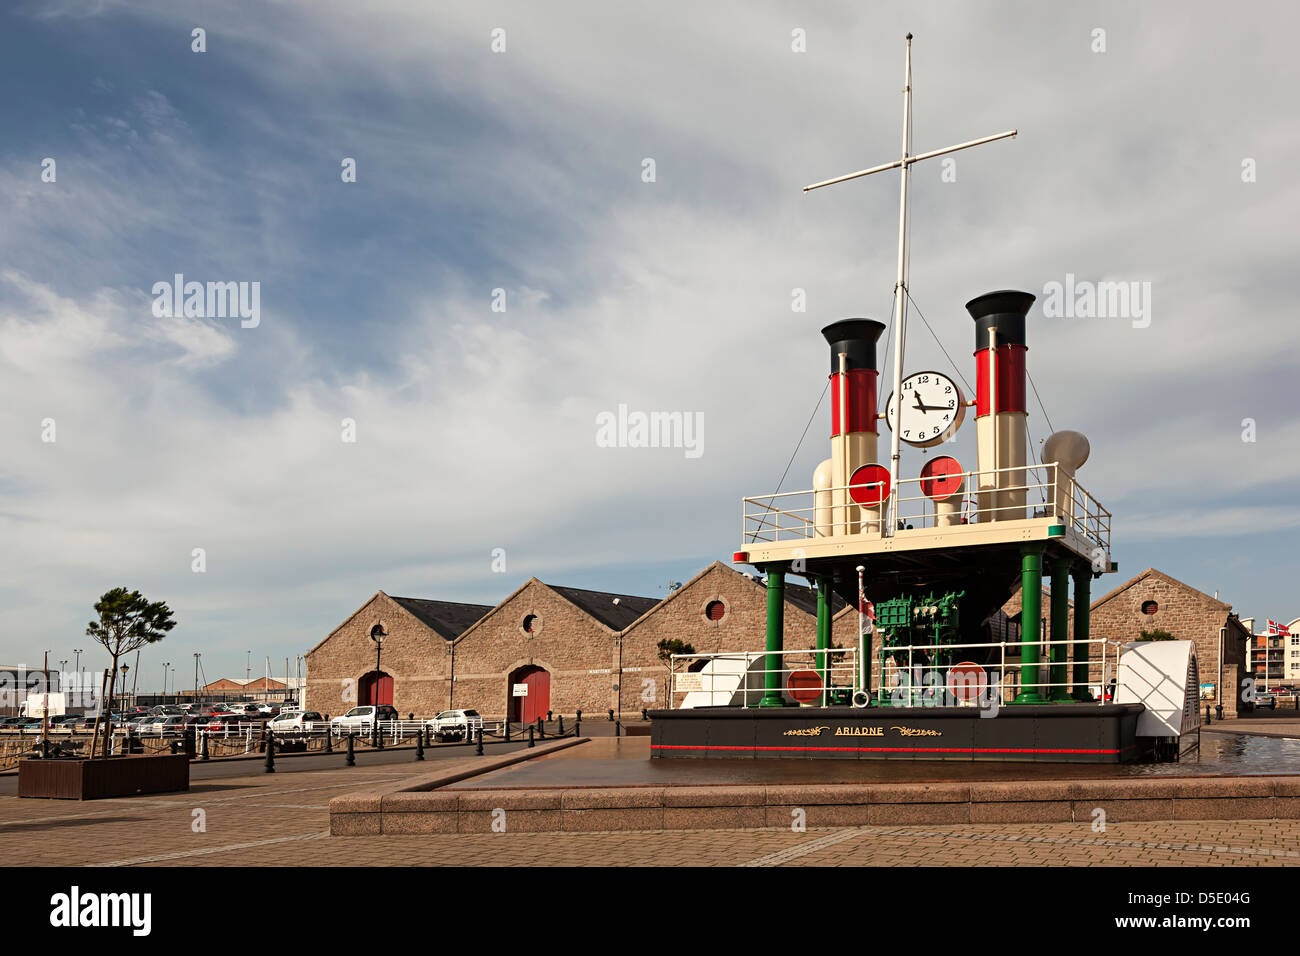 Reloj de vapor teh Ariadna, St Helier, Jersey, Islas del Canal, REINO UNIDO Foto de stock